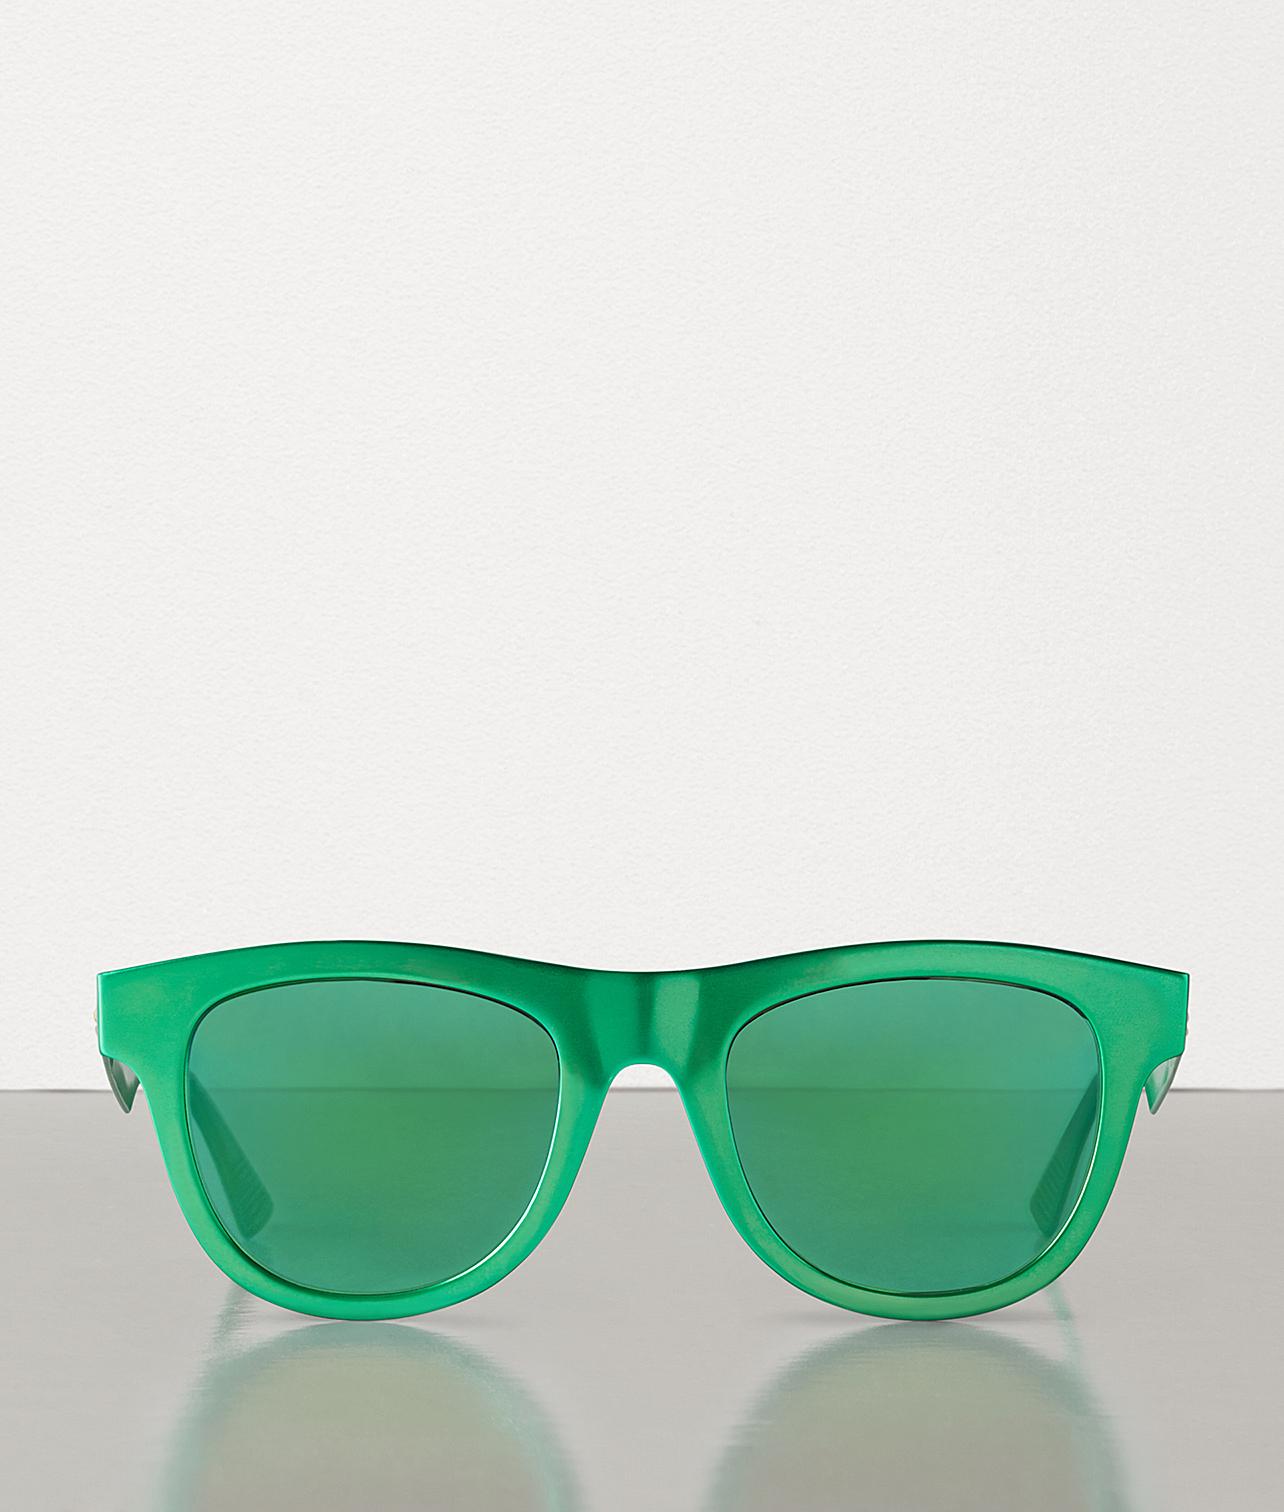 Bottega Veneta Sunglasses in Green - Lyst